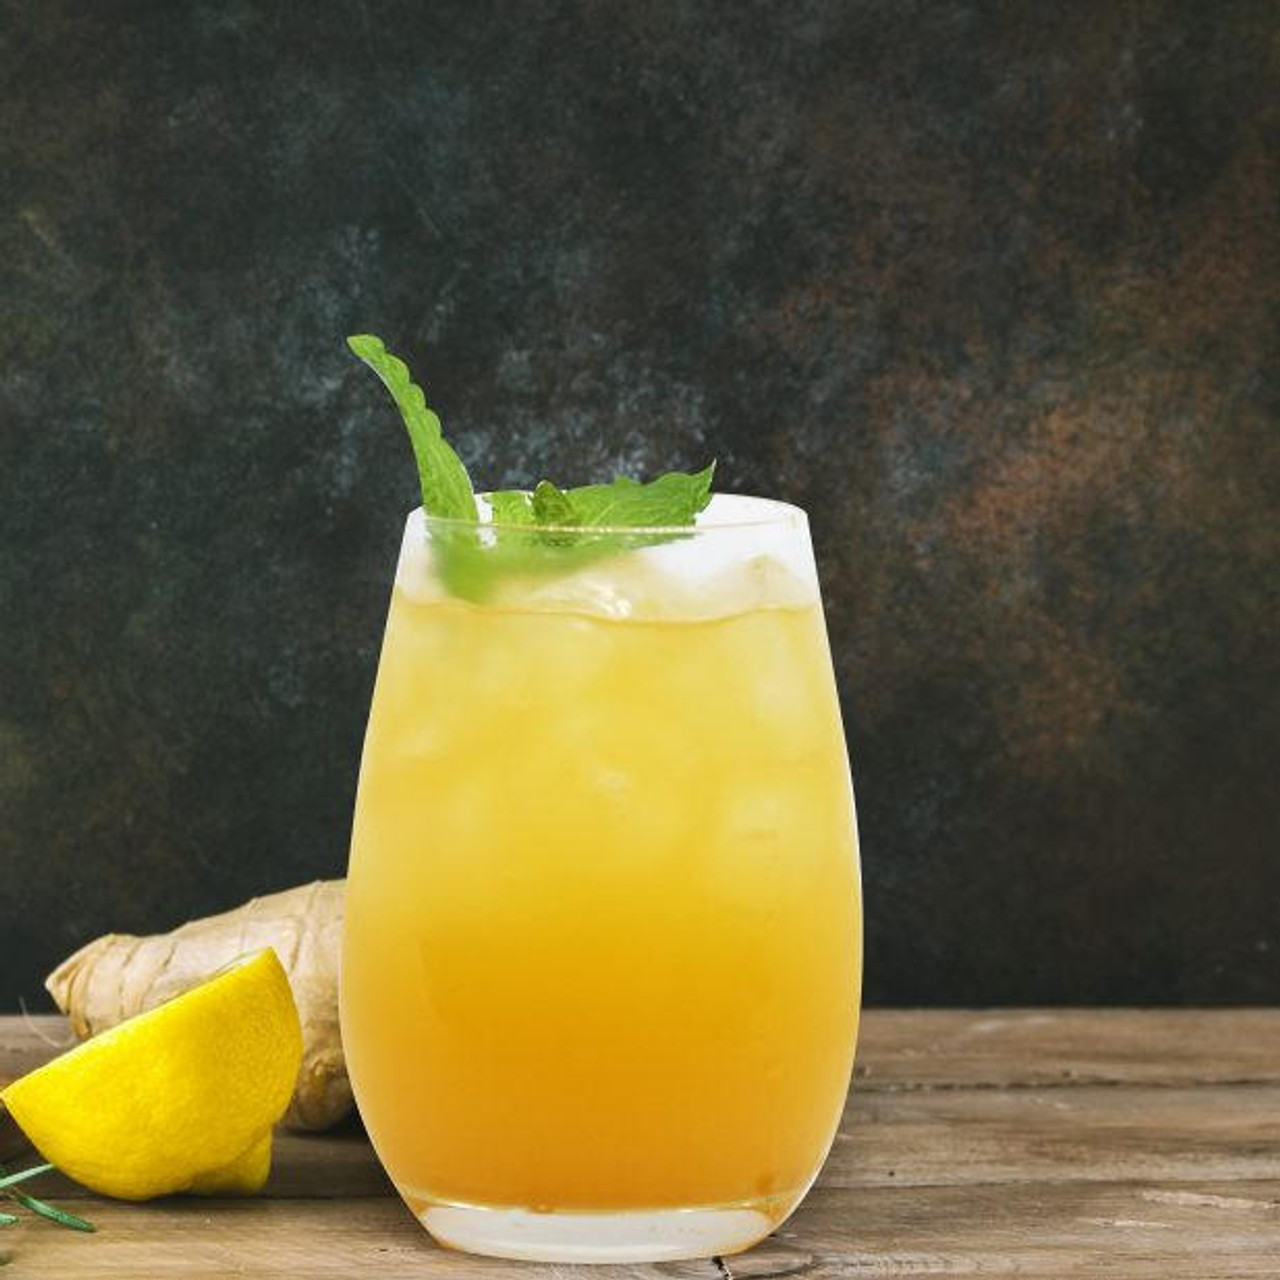  SHOTT Mango Real Fruit Flavoring Syrup - 1 Liter Bottle for Tropical Bliss 